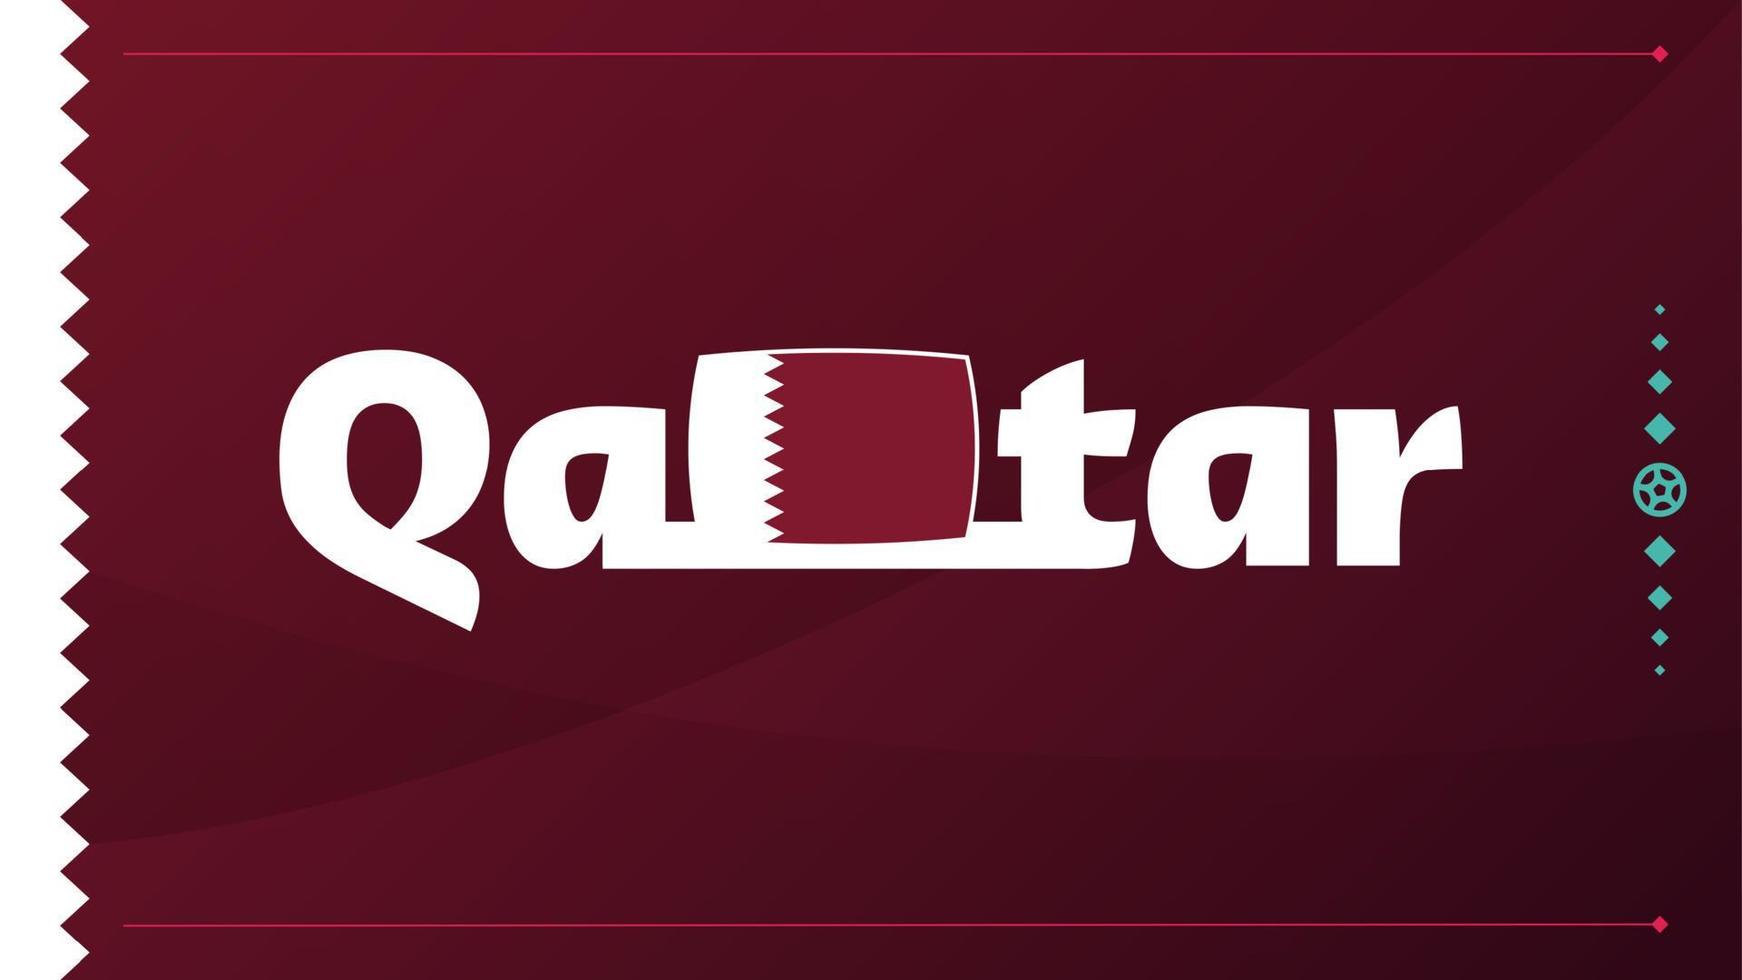 qatar vlag en tekst op 2022 voetbaltoernooi achtergrond. vector illustratie voetbal patroon voor banner, kaart, website. bordeaux kleur nationale vlag qatar